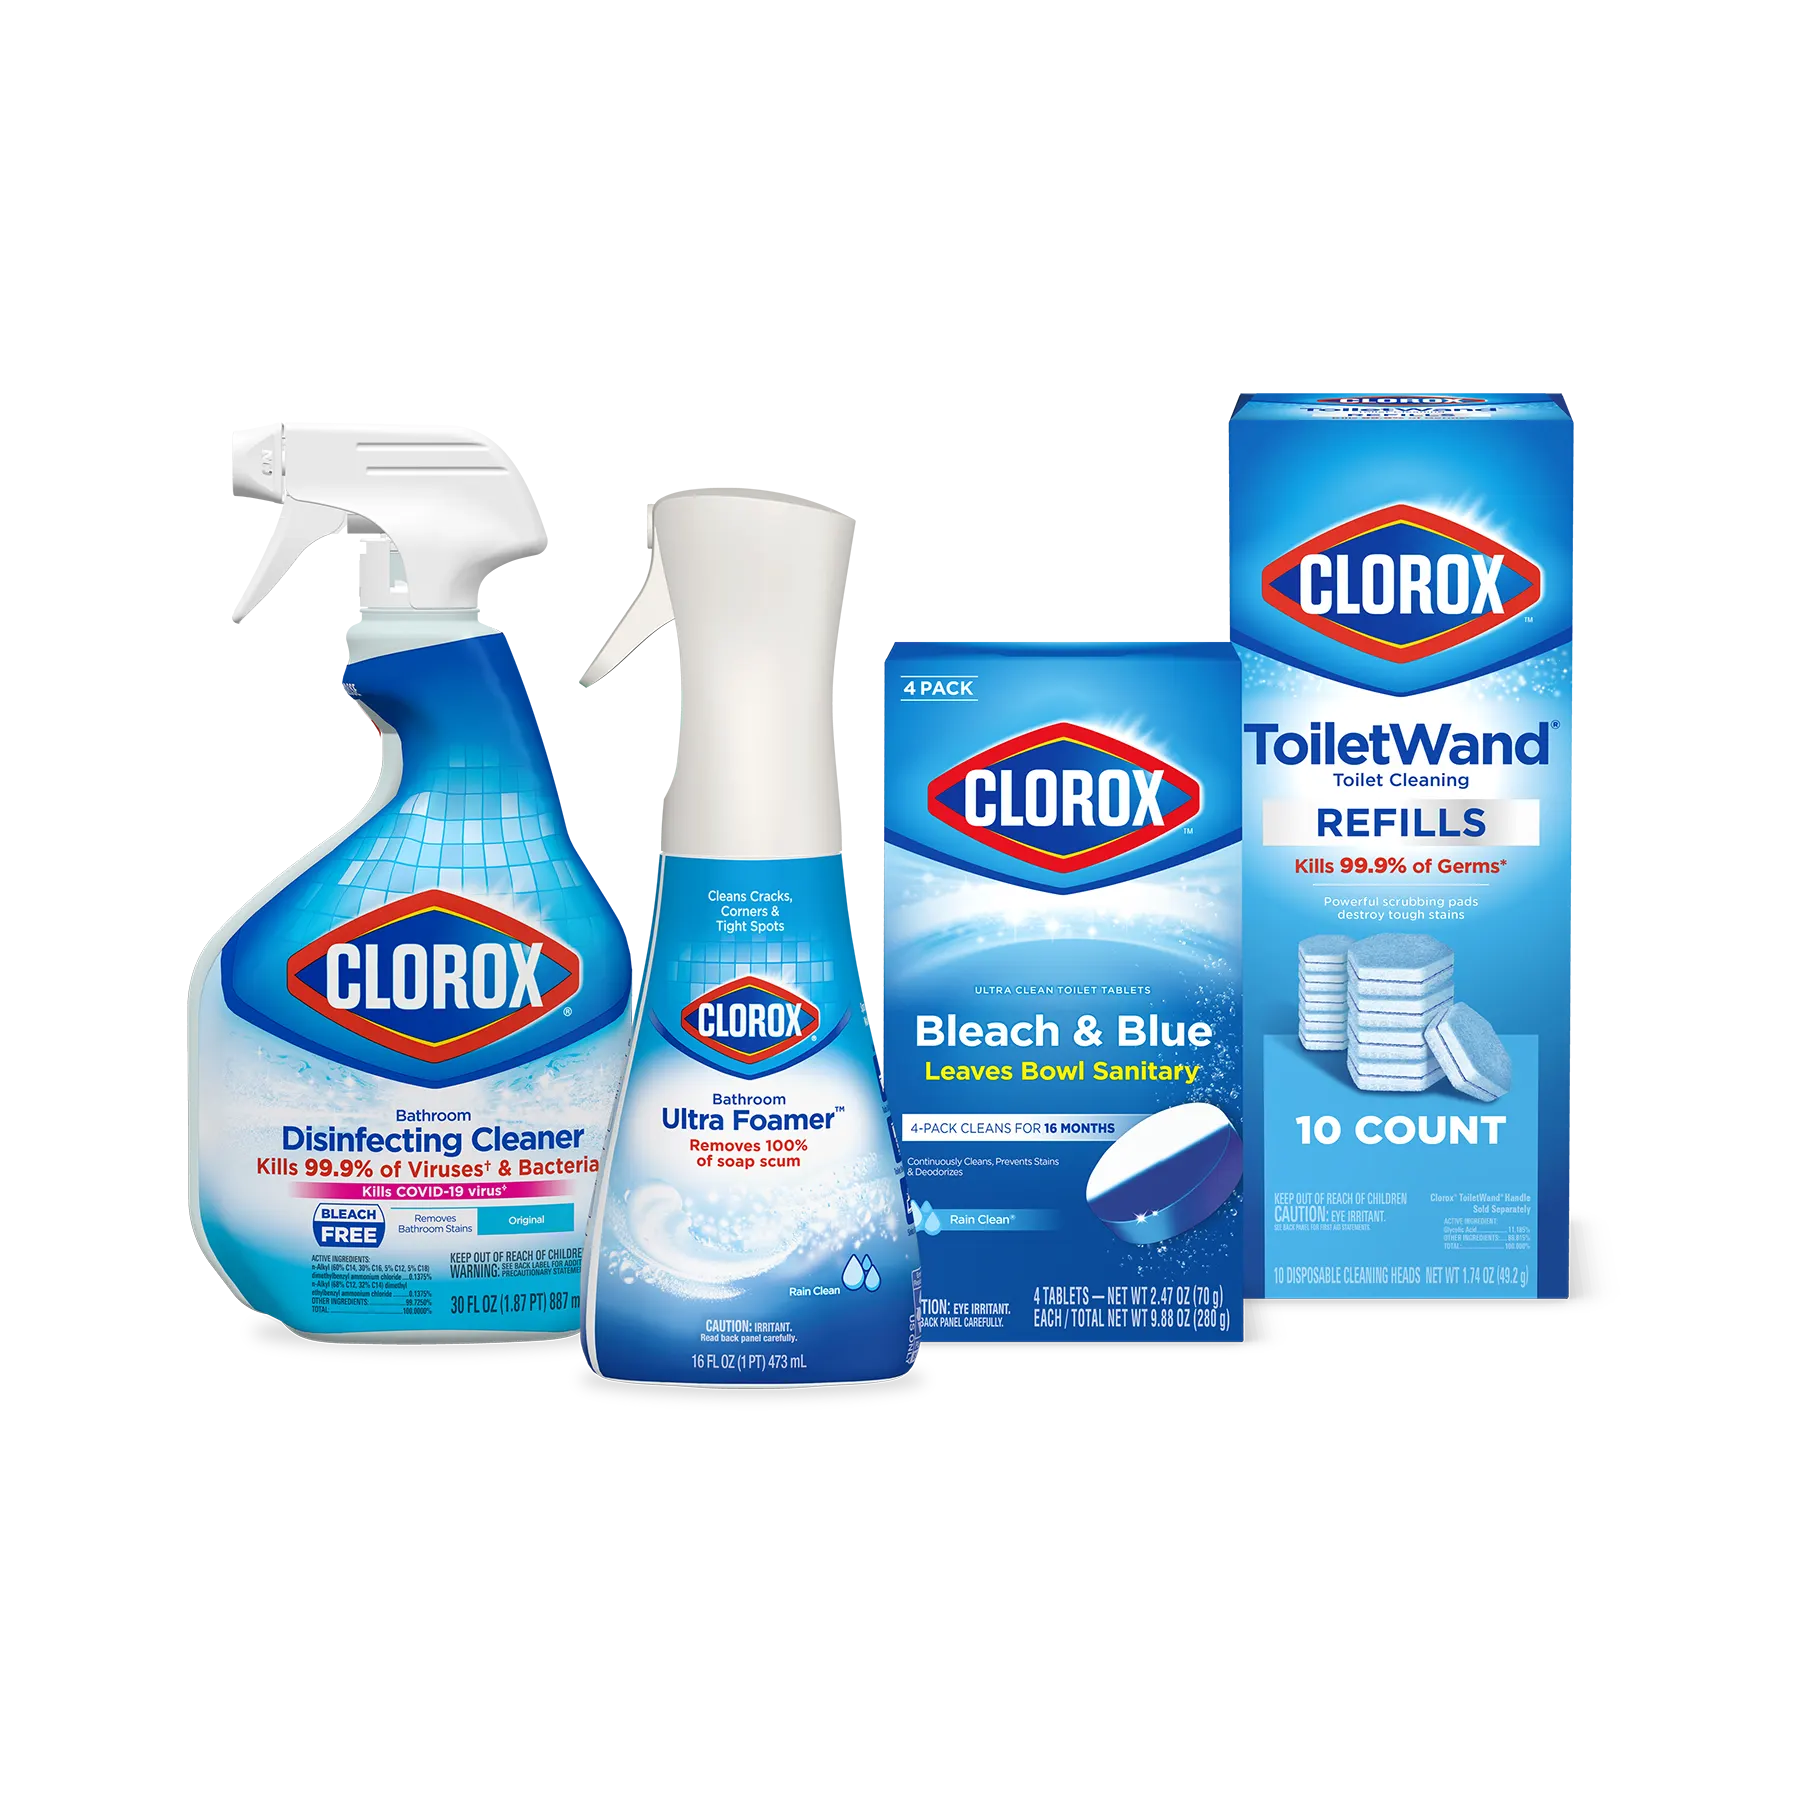 Toallitas Desinfectantes Clorox Expert Flowpack 15 Unidades — Liker Shop